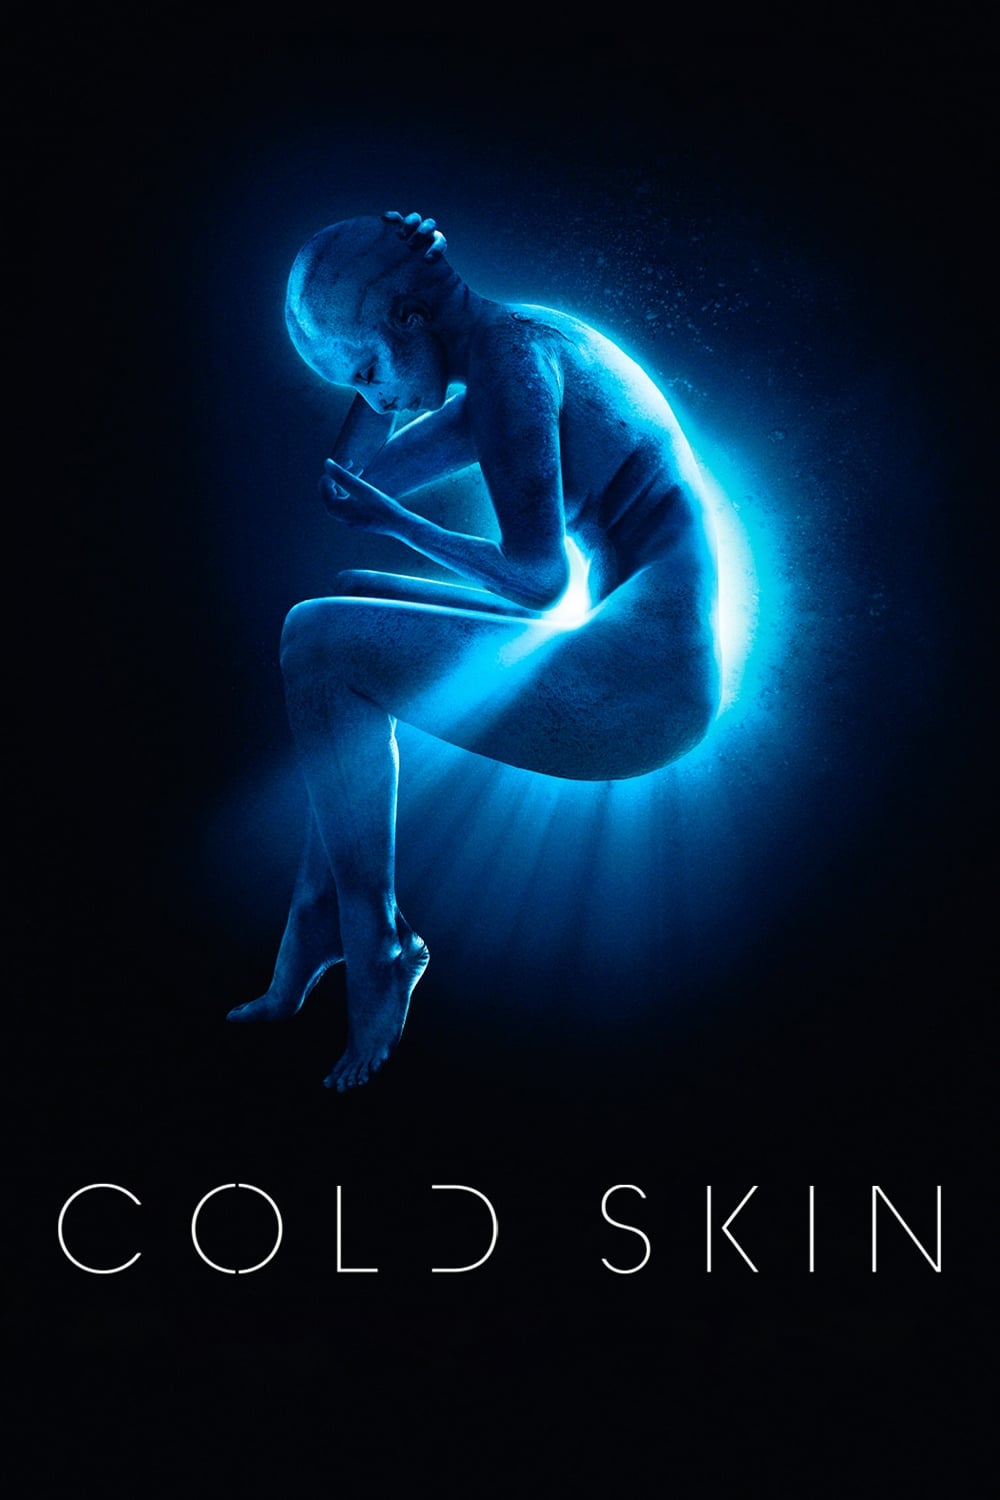 Cold Skin